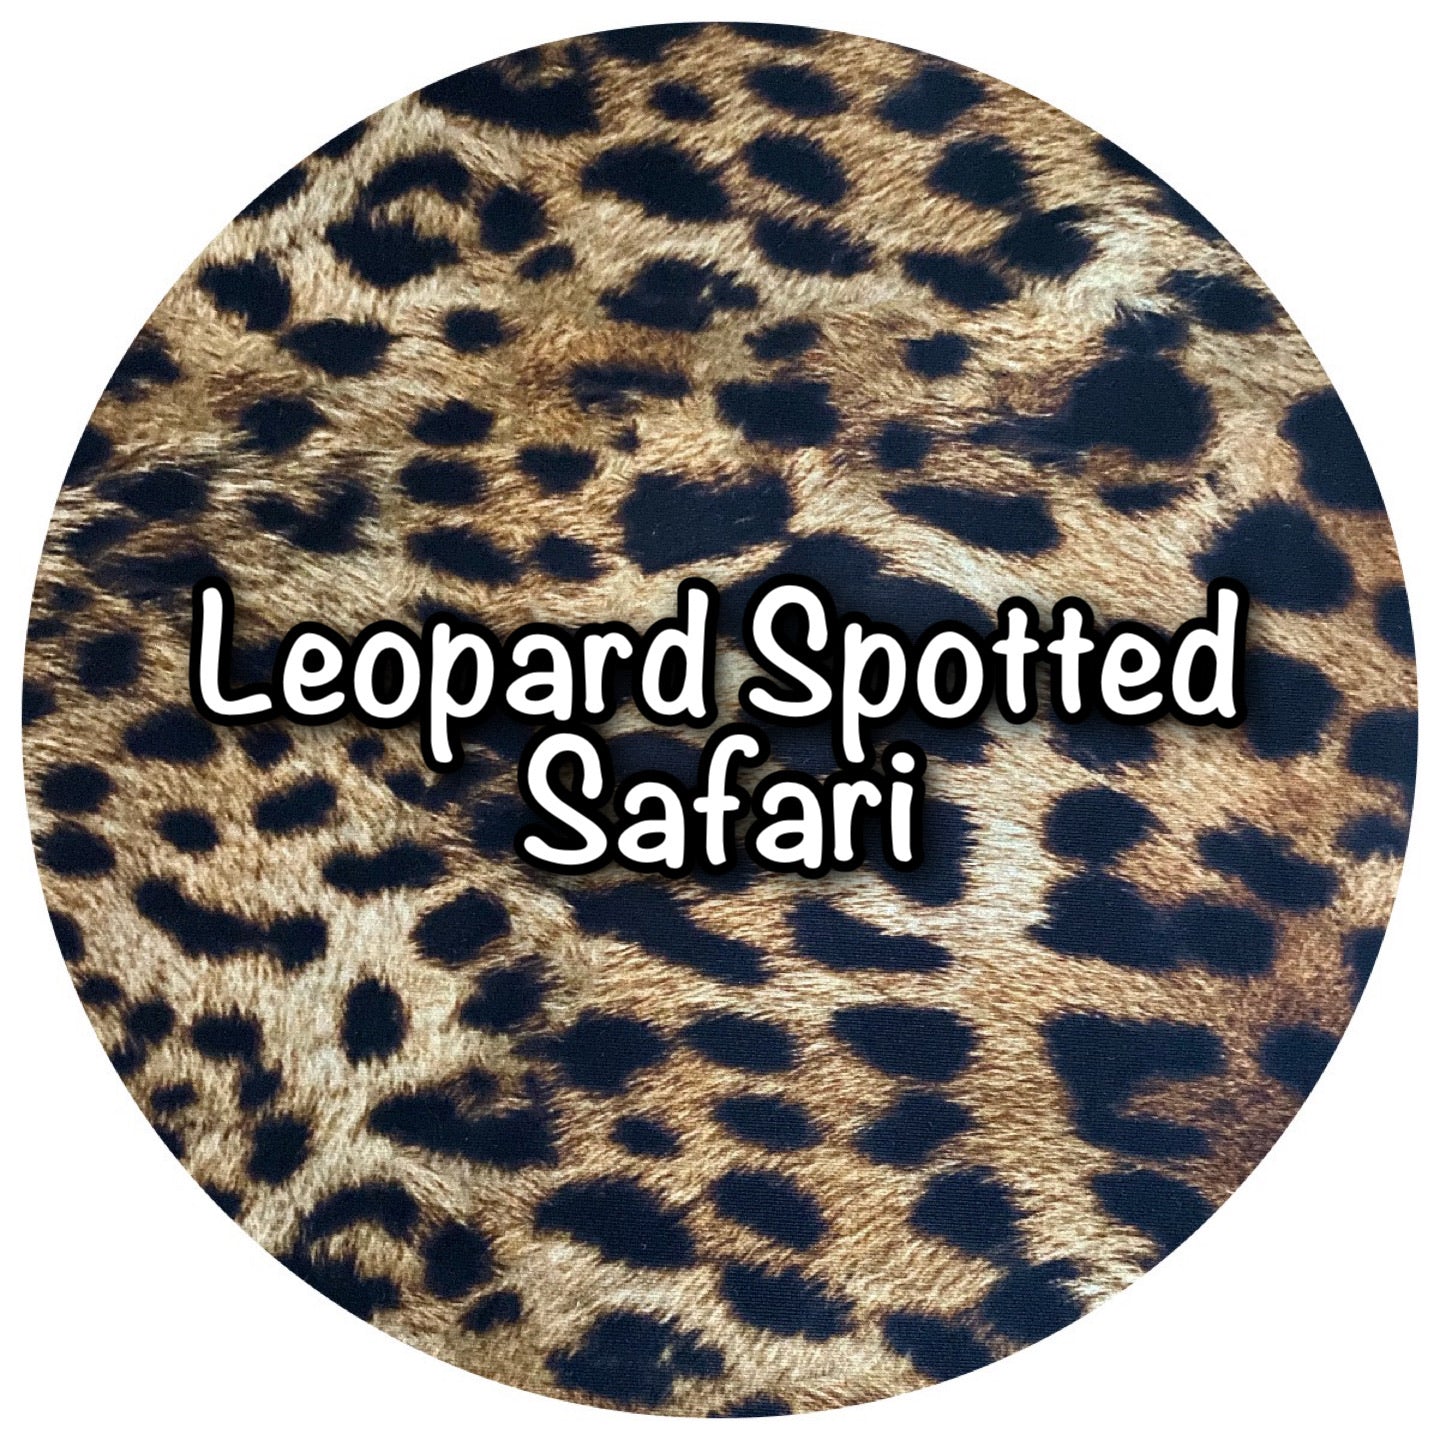 Leopard Spotted Safari